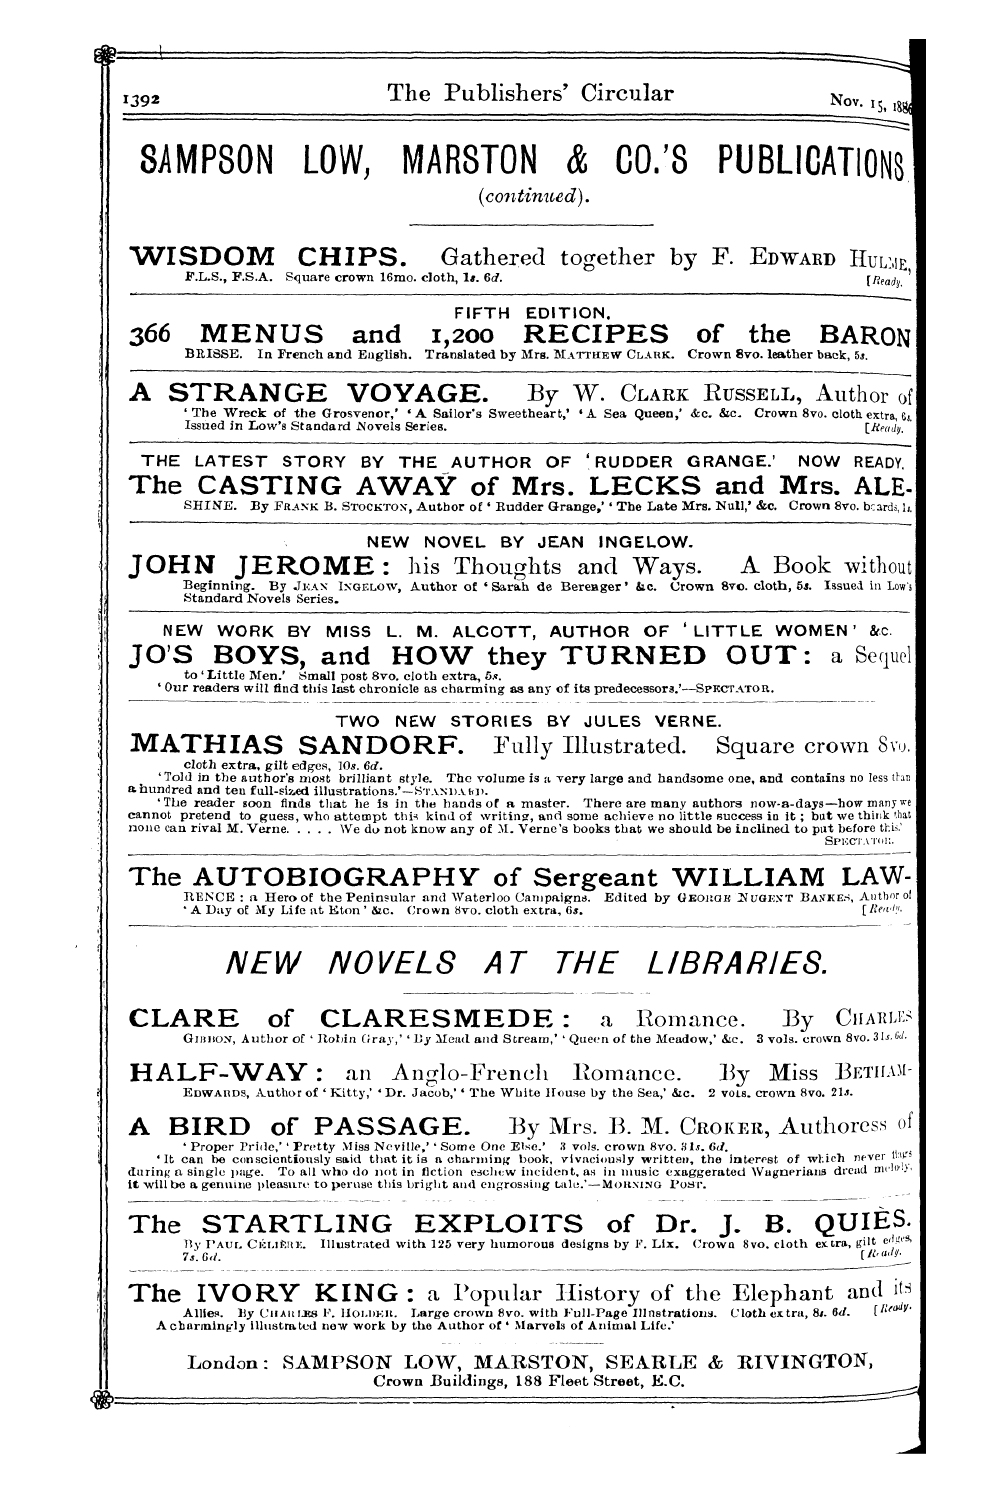 Publishers’ Circular (1880-1890): jS F Y, 1st edition: 34